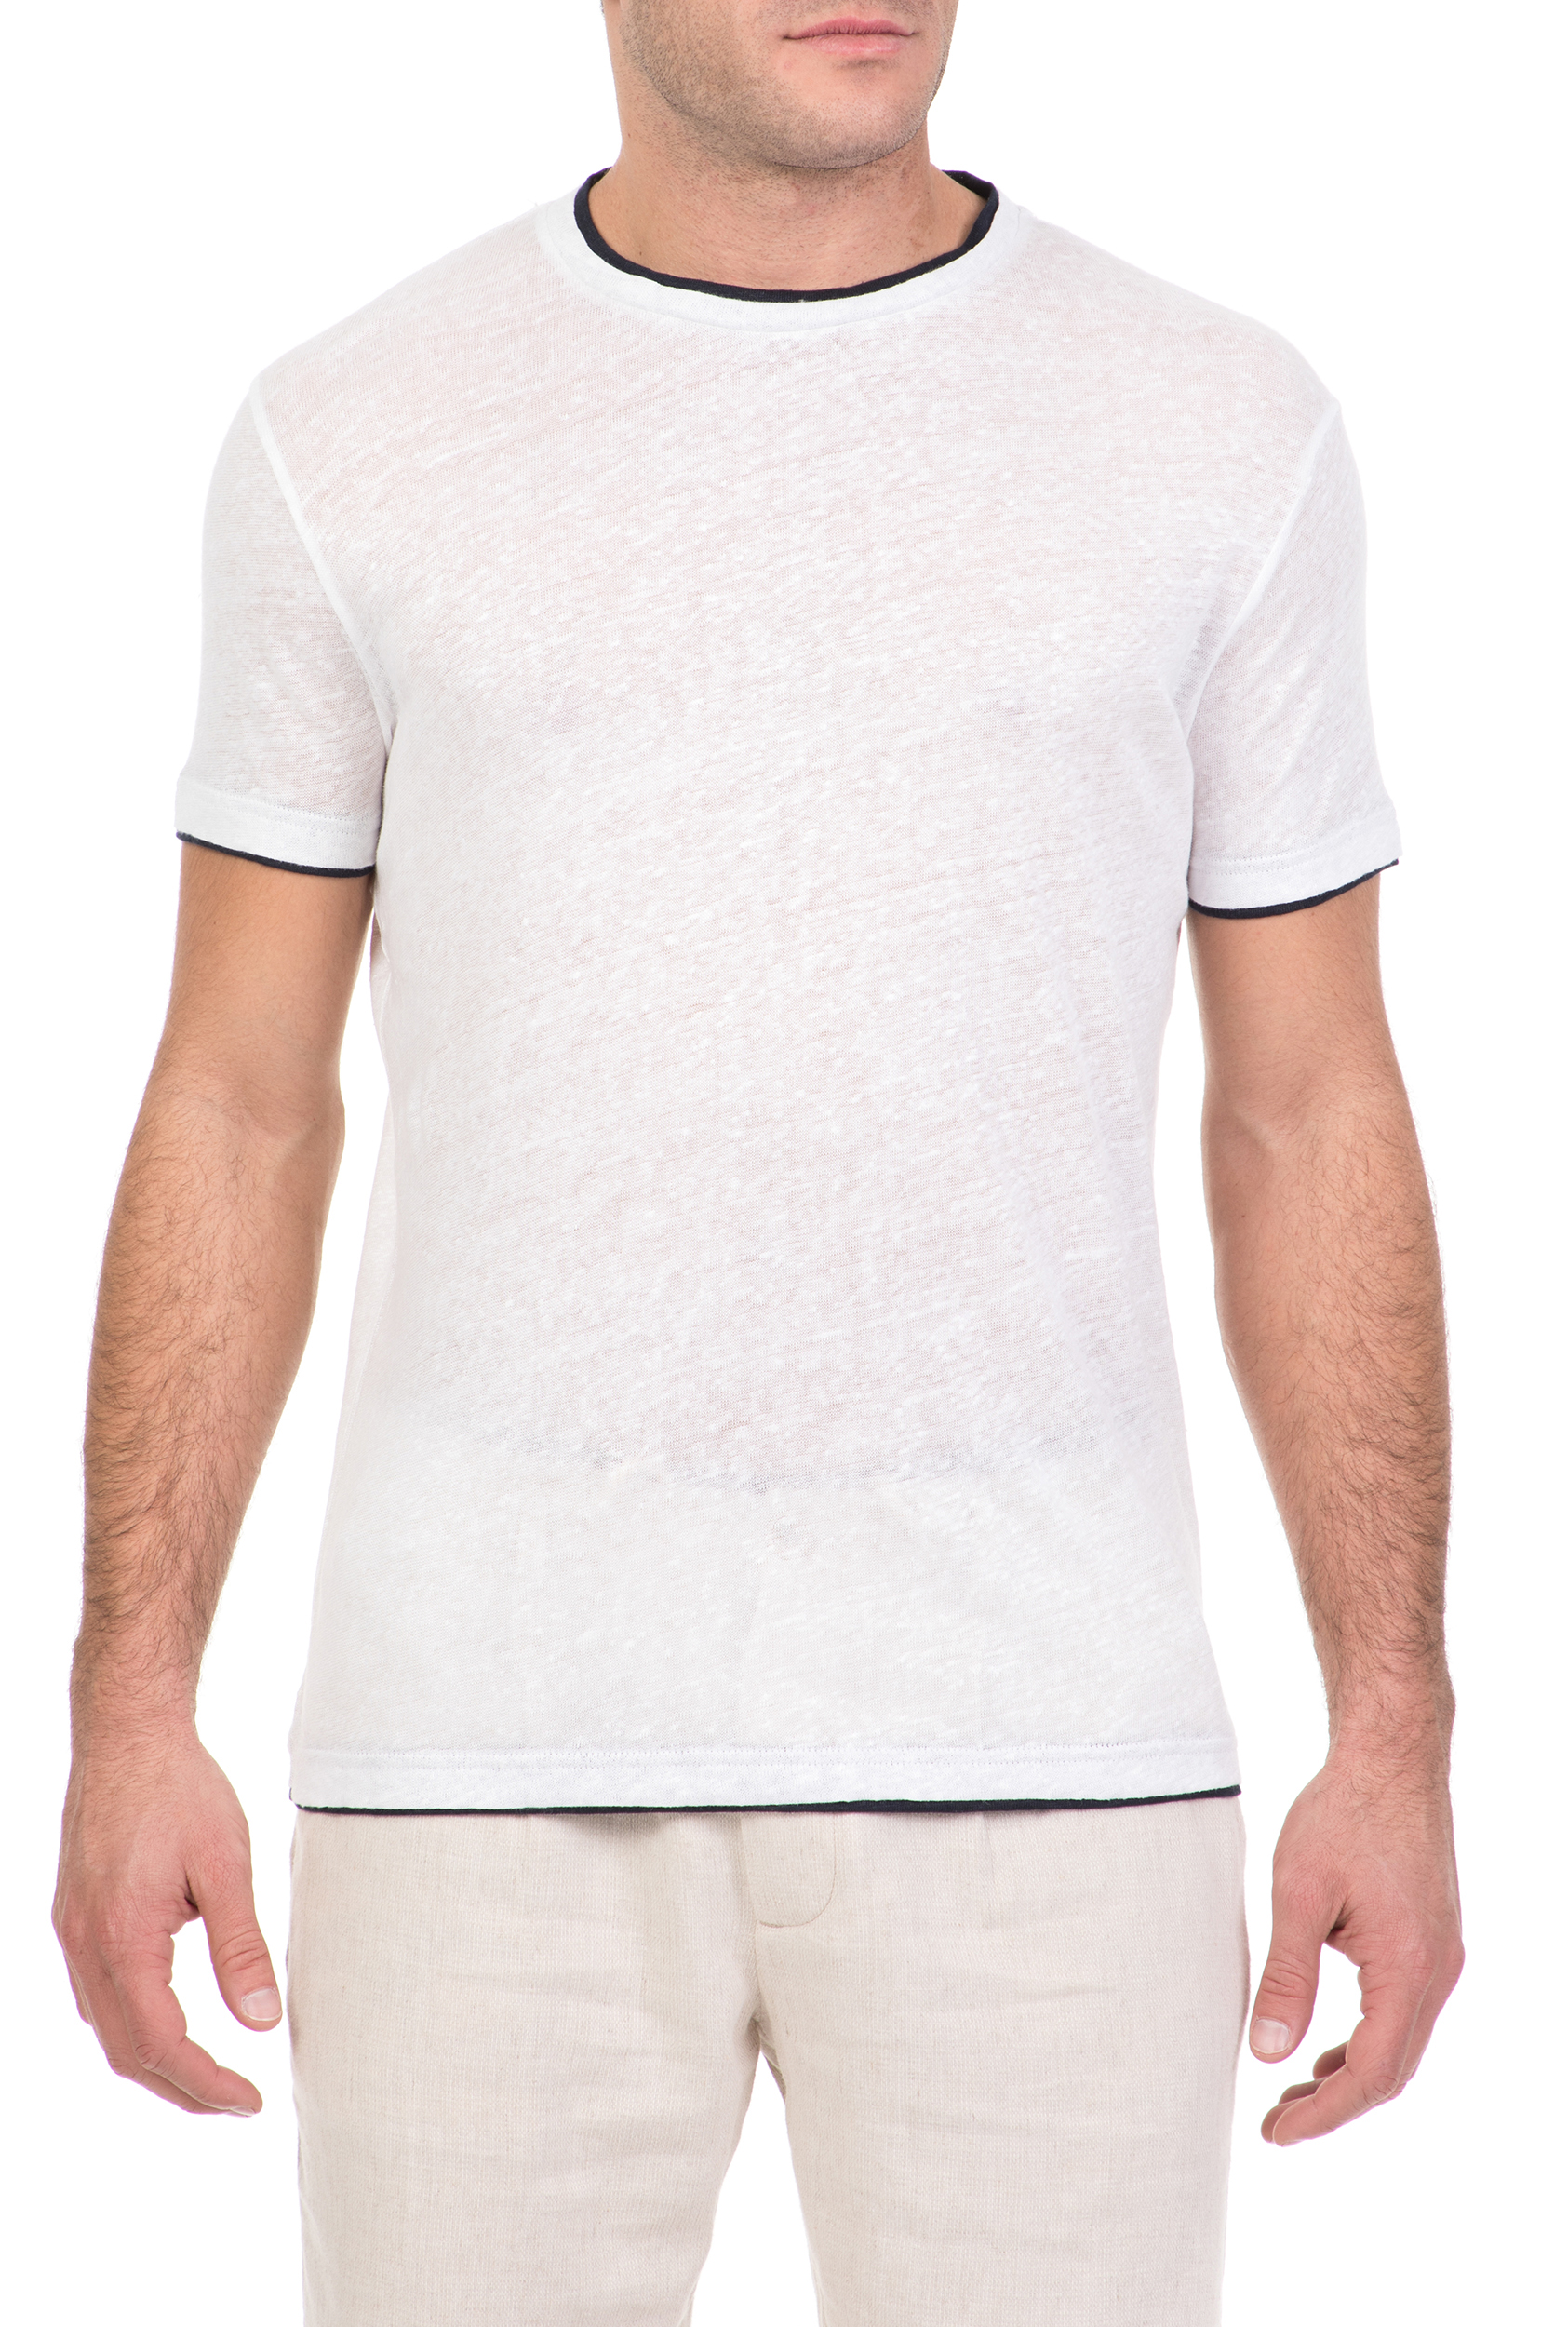 SSEINSE - Ανδρική κοντομάνικη μπλούζα SSEINSE λευκή Ανδρικά/Ρούχα/Μπλούζες/Κοντομάνικες